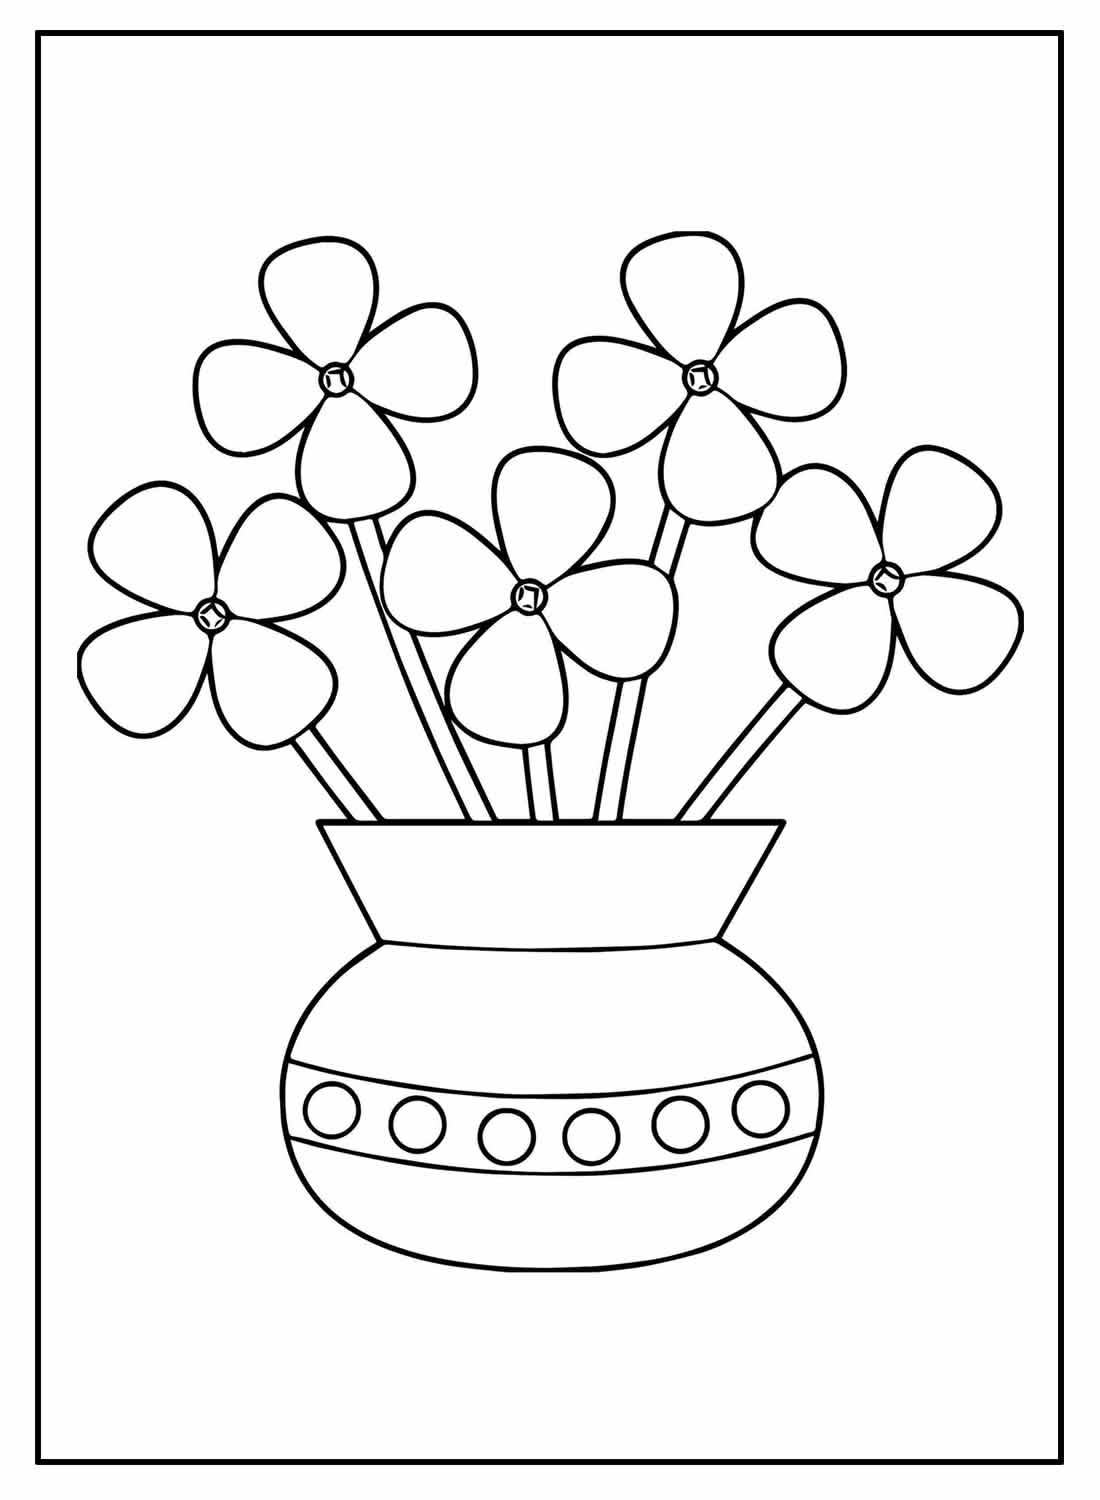 Детский рисунок ваза с конфетами